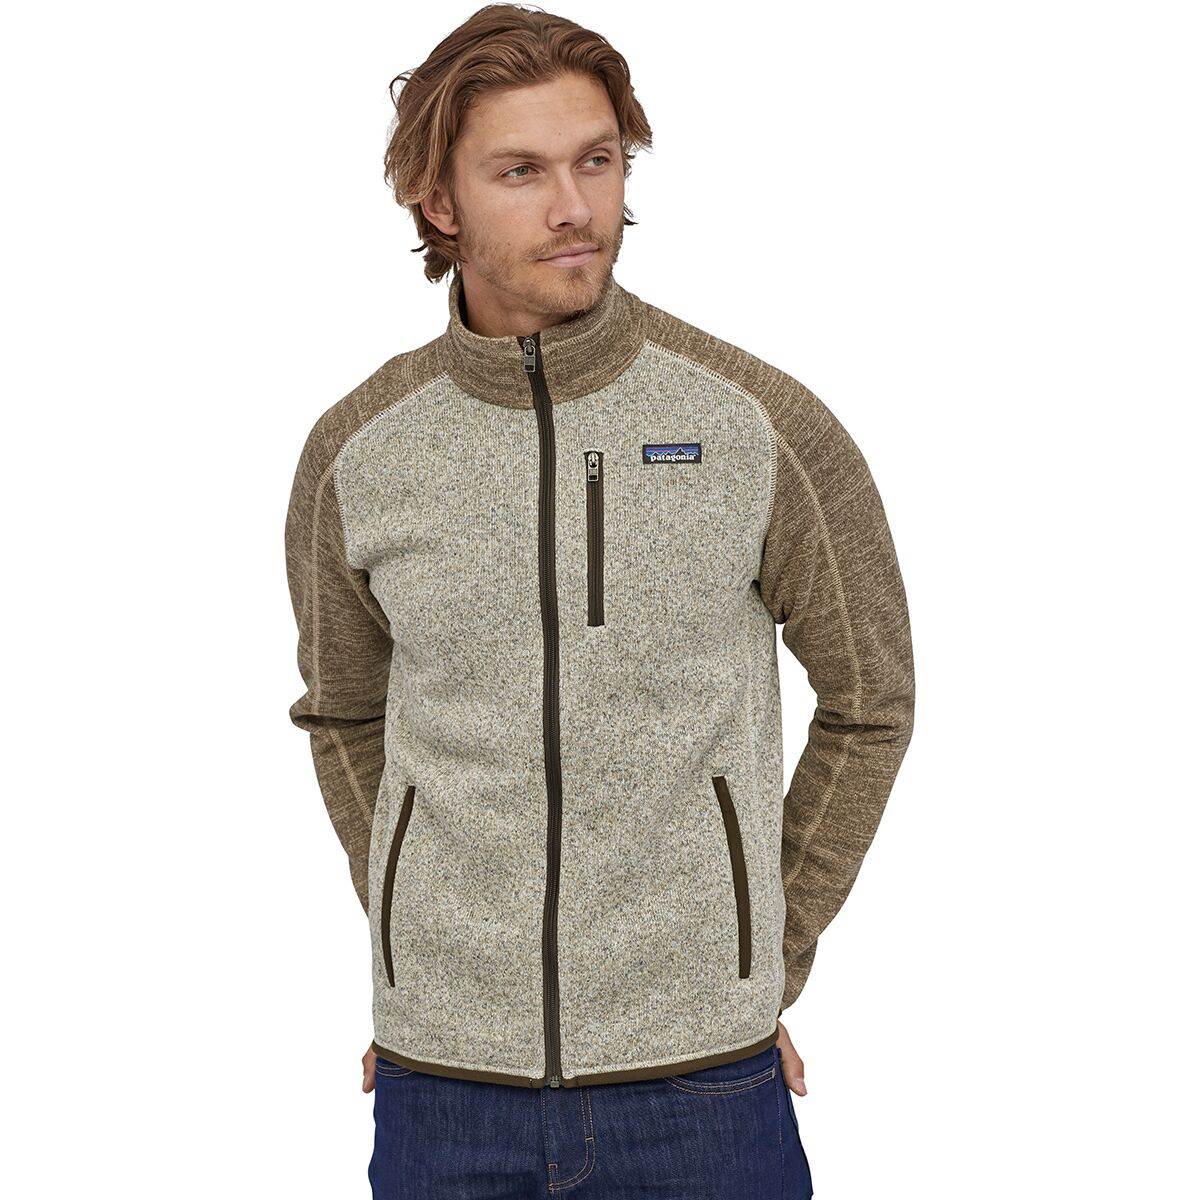 Patagonia Better Sweater Fleece Jacket - Men's | Backcountry.com